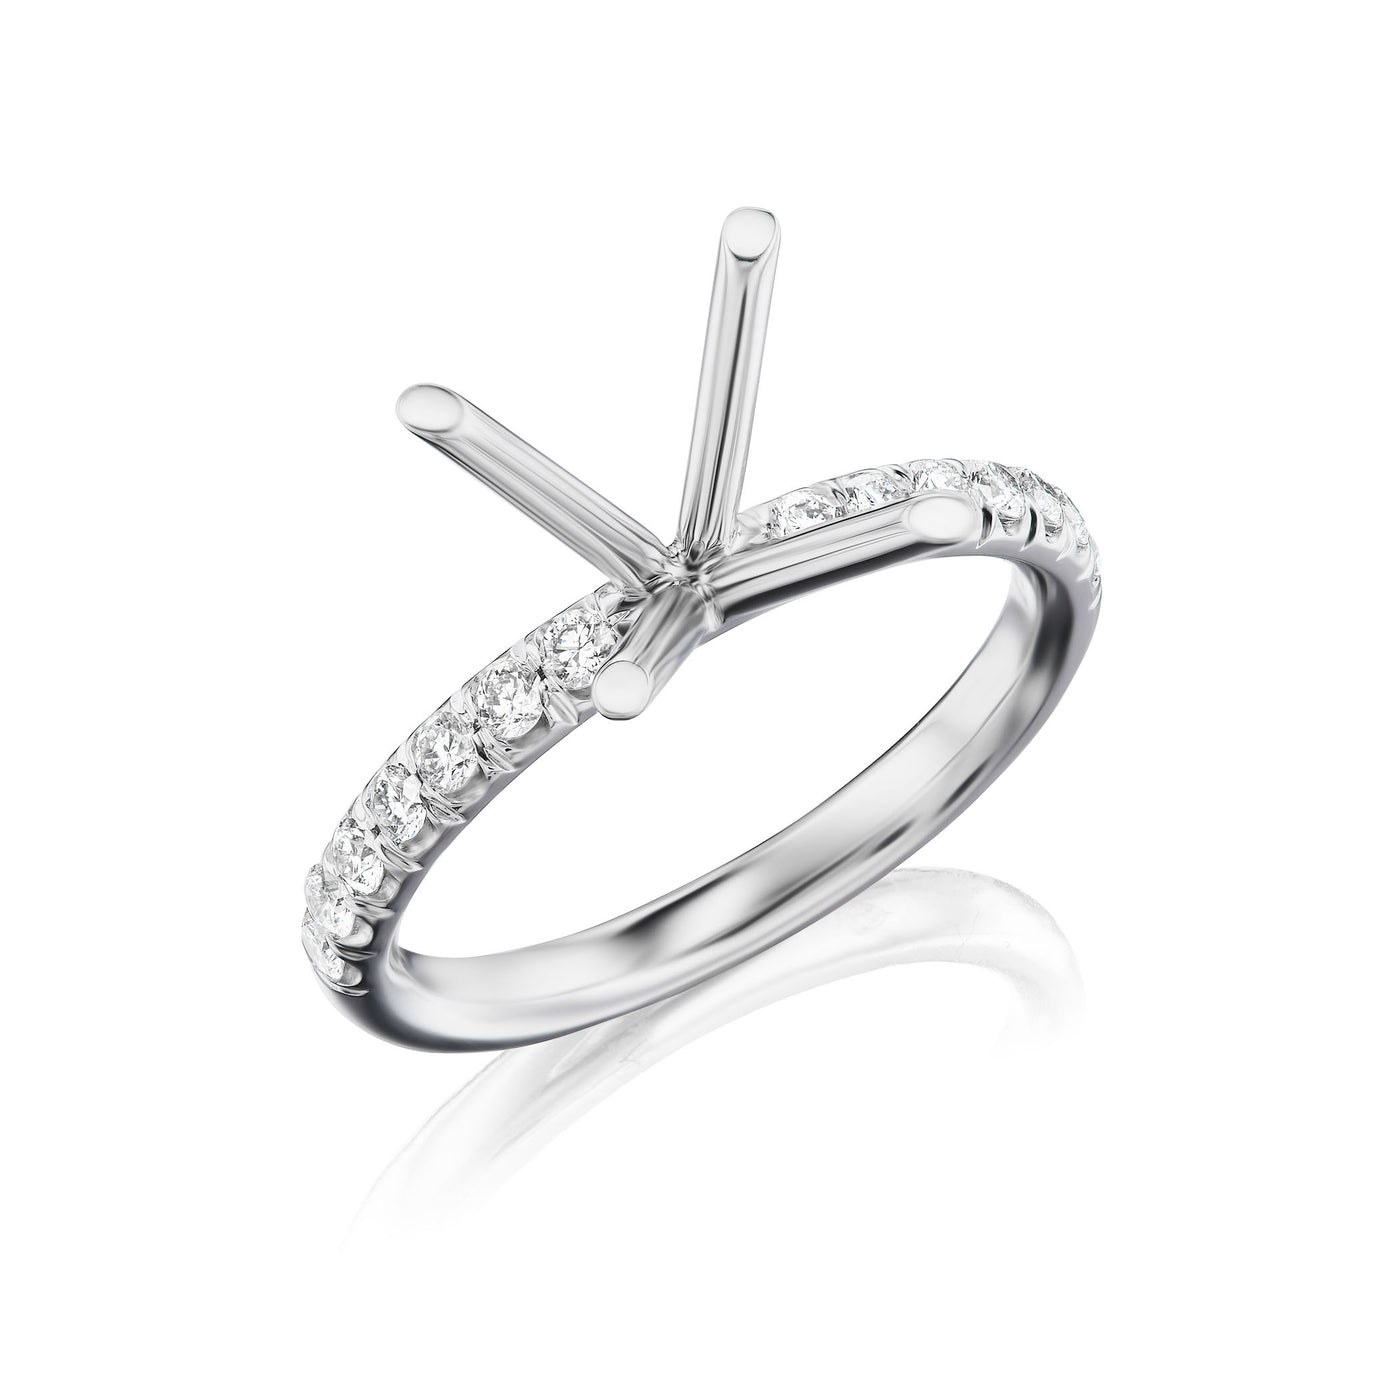 4 Prong Rounded Diamond Shank Engagement Ring Setting